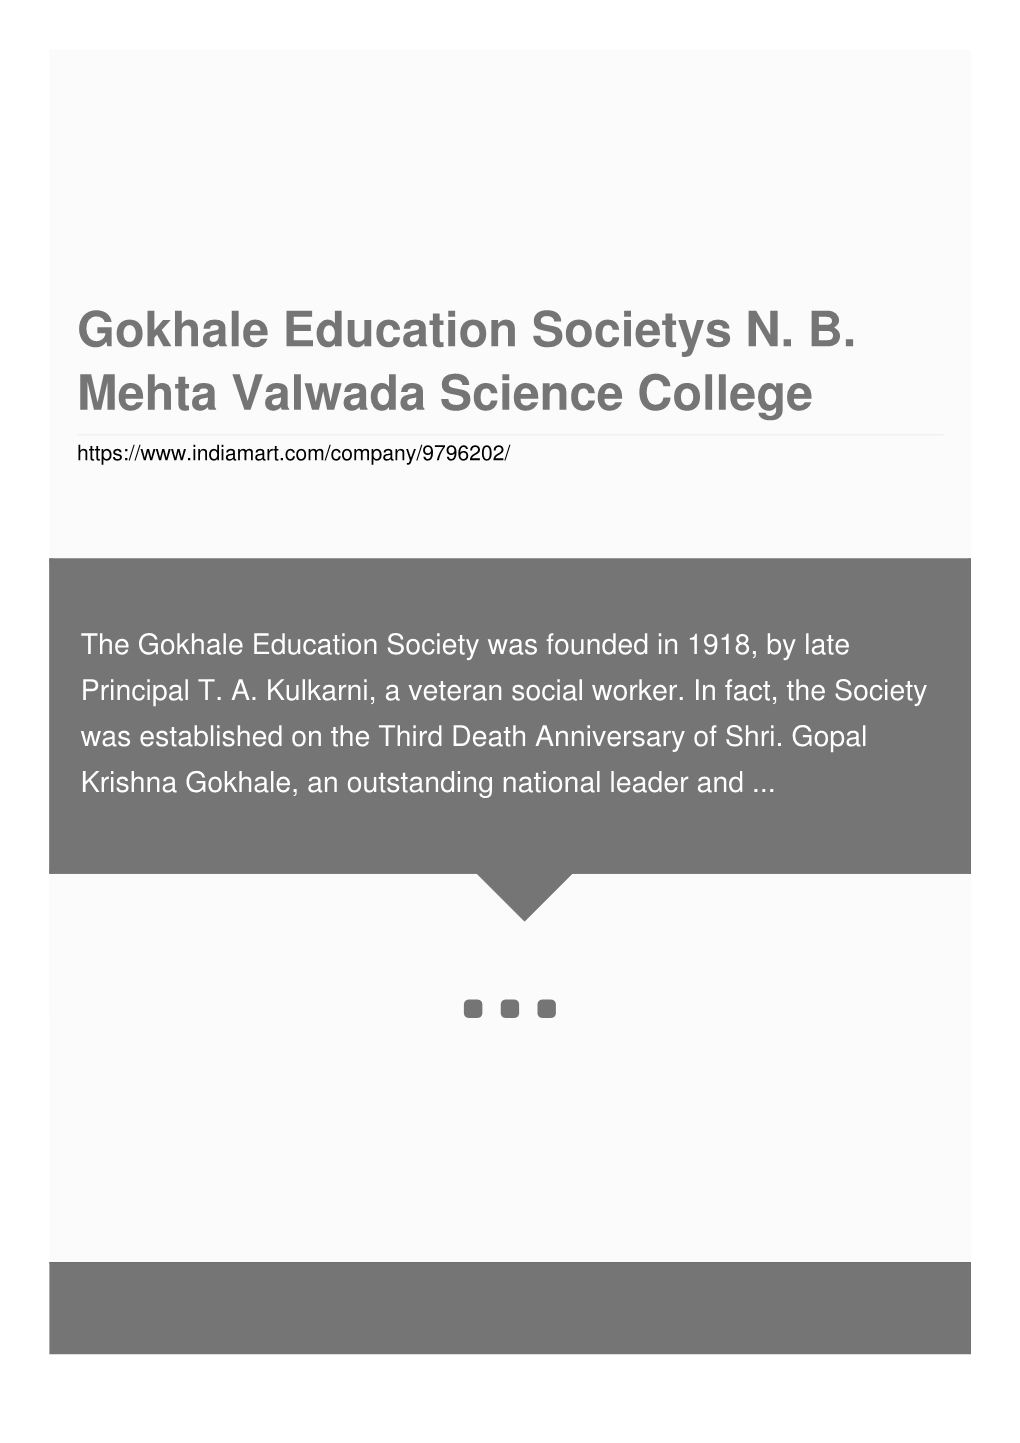 Gokhale Education Societys N. B. Mehta Valwada Science College